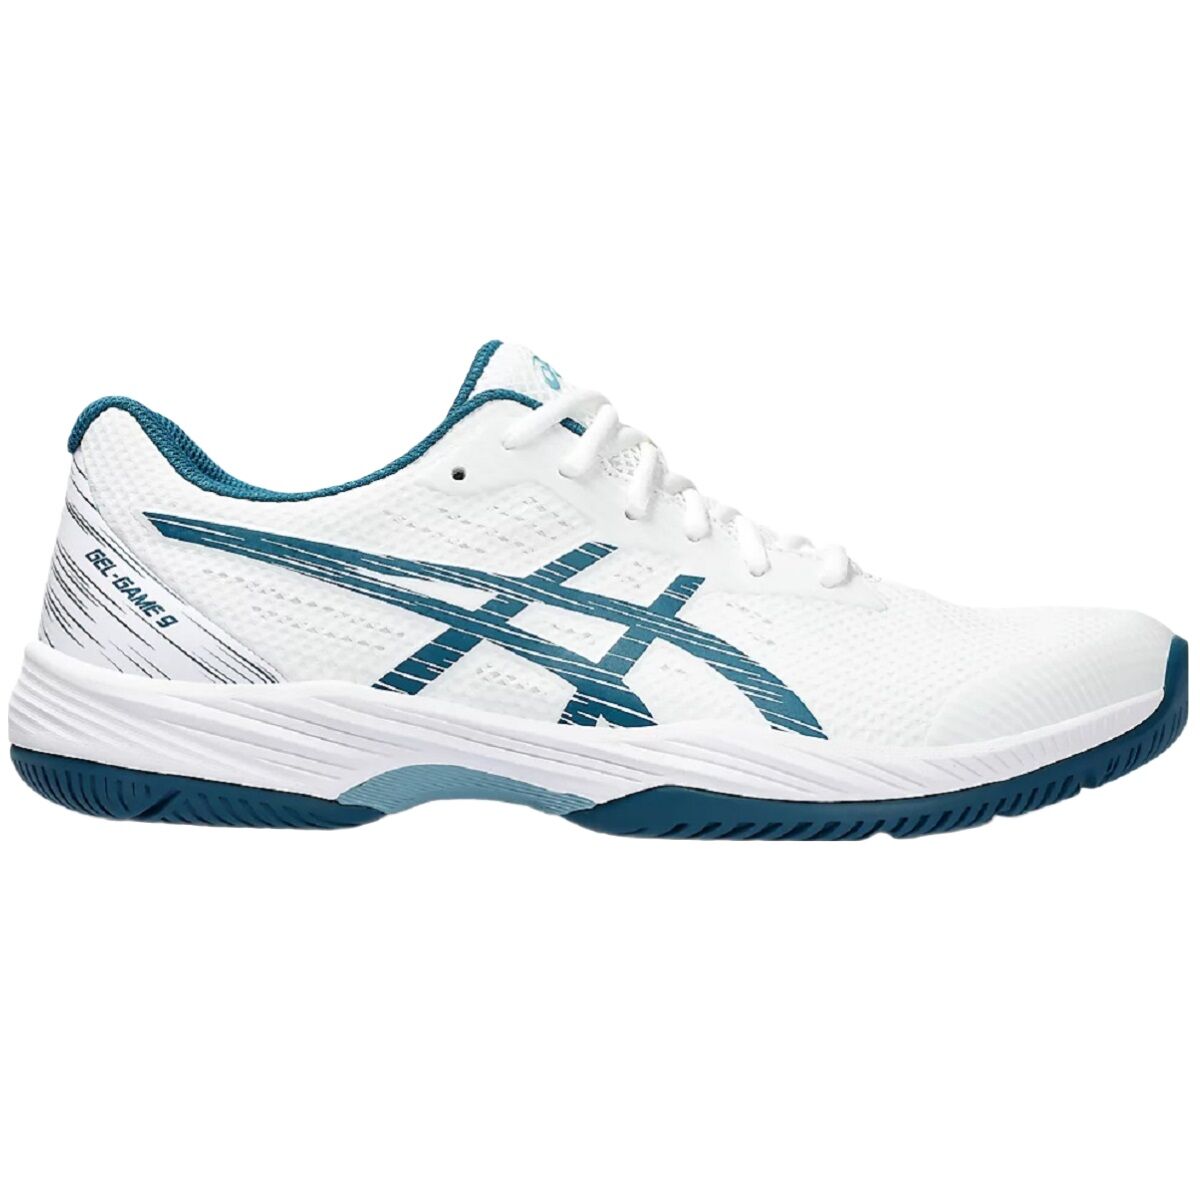 Asics Men's Gel-Game 9 Tennis Shoes (White/Restful Teal)